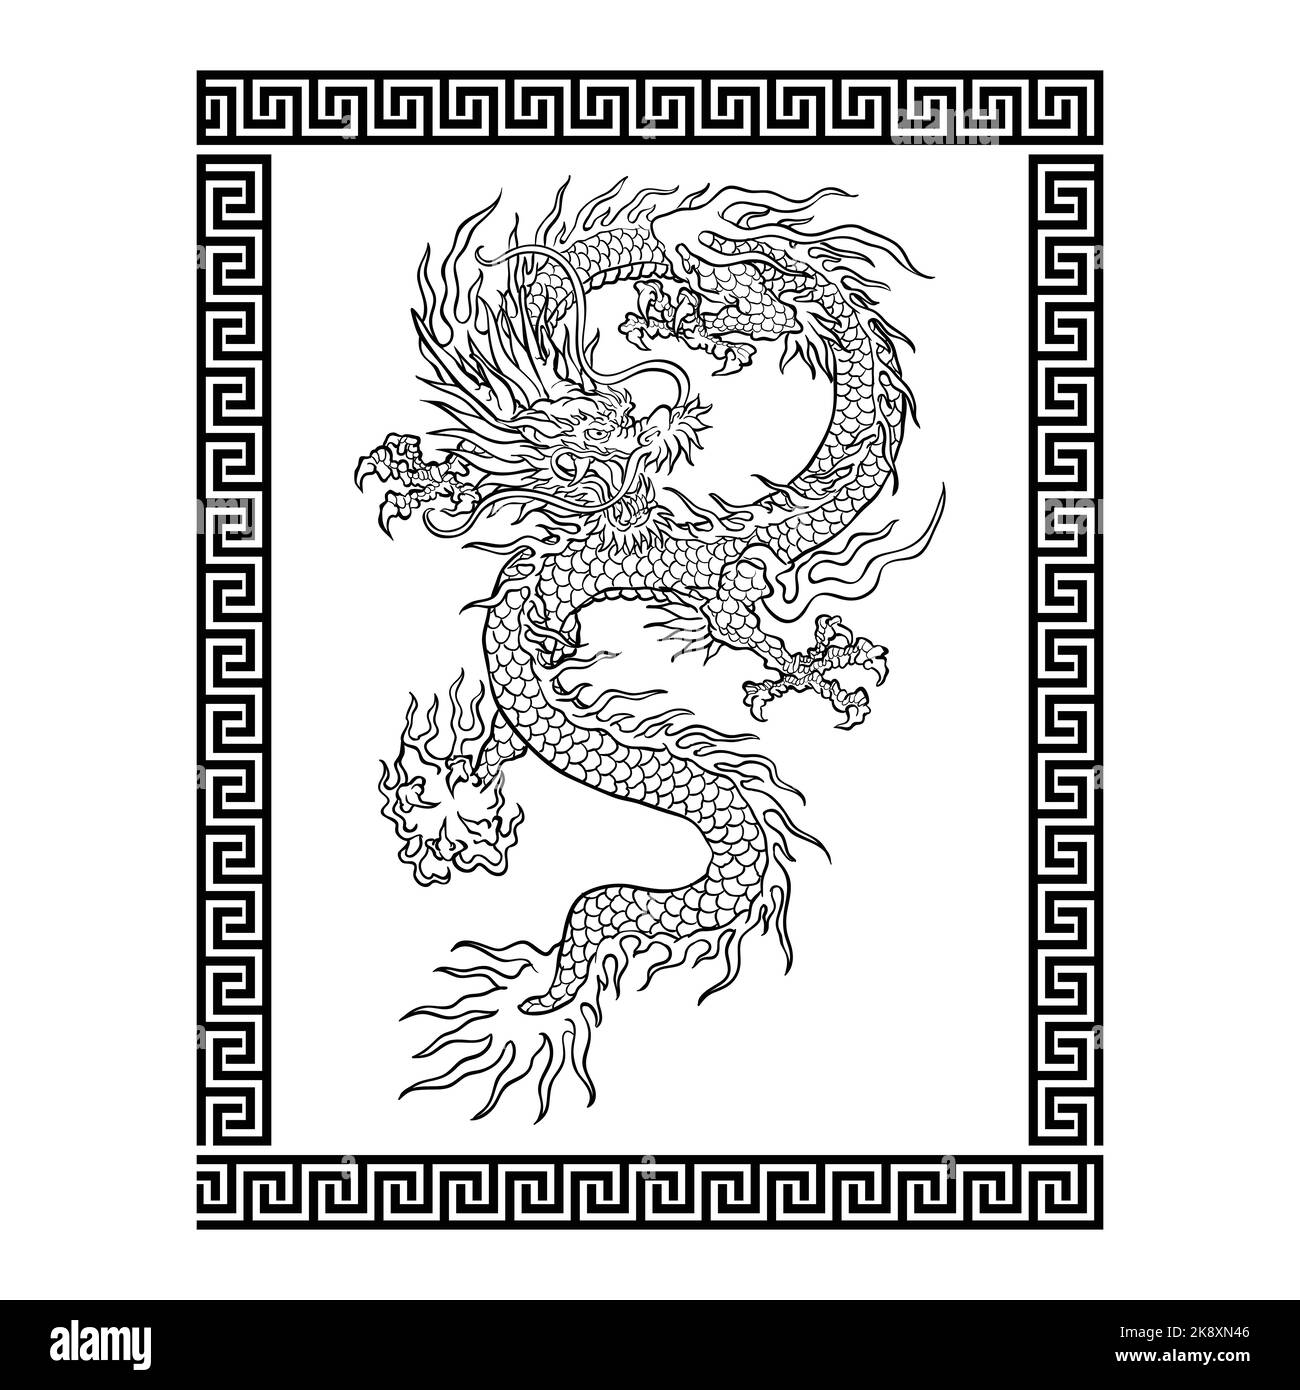 Traditional ancient dragon artwork design. Editable, resizable, EPS 10, vector illustration. Stock Vector